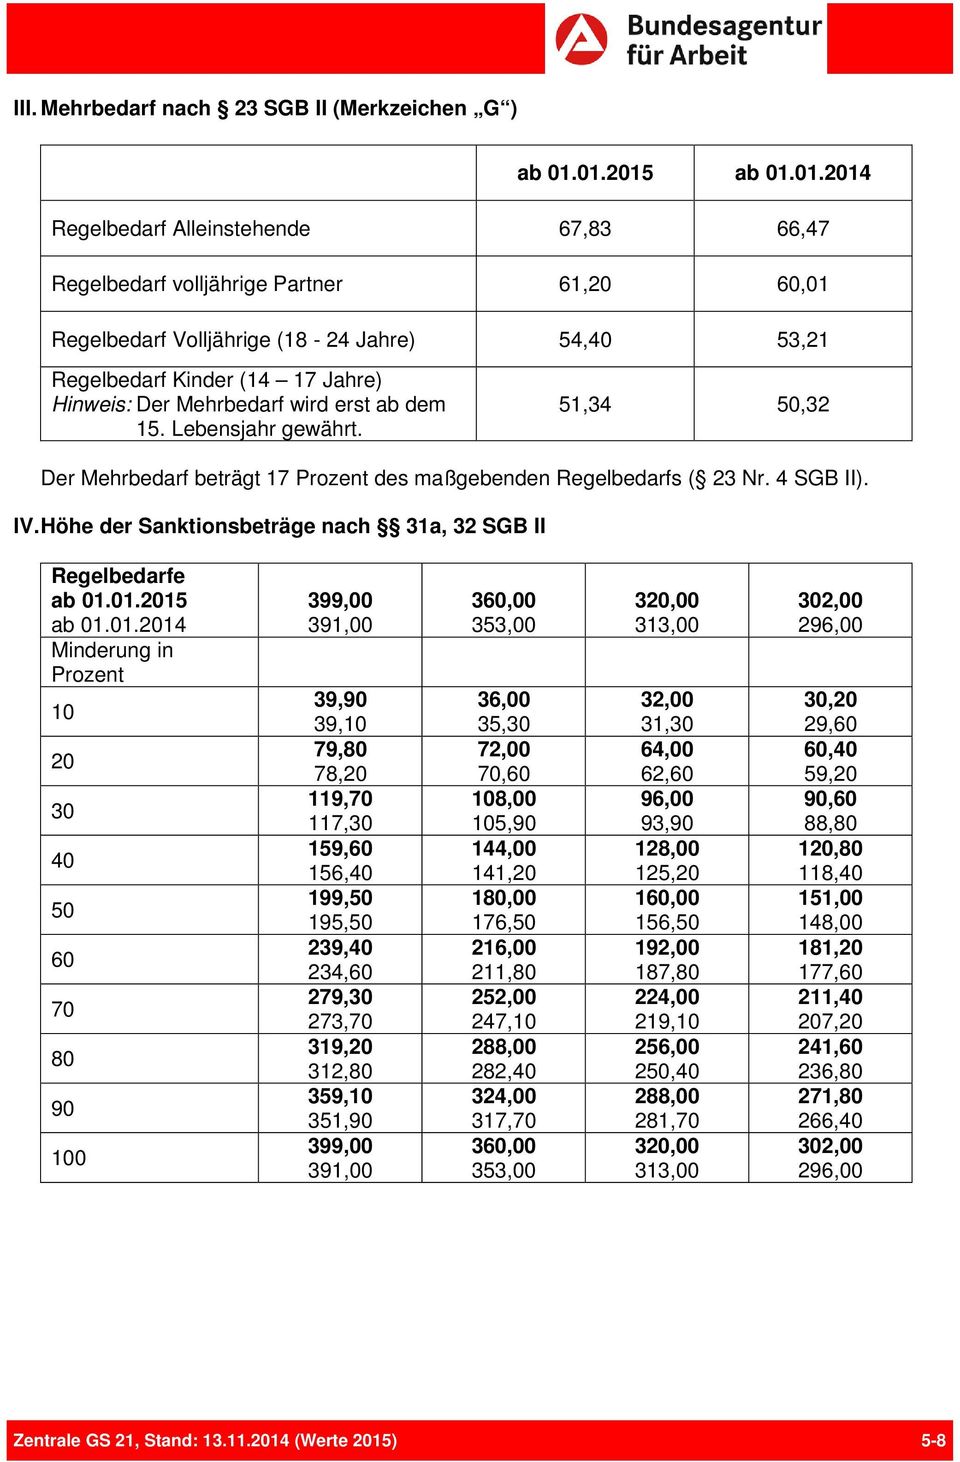 Höhe der Sanktionsbeträge nach 31a, 32 SGB II Regelbedarfe ab 01.